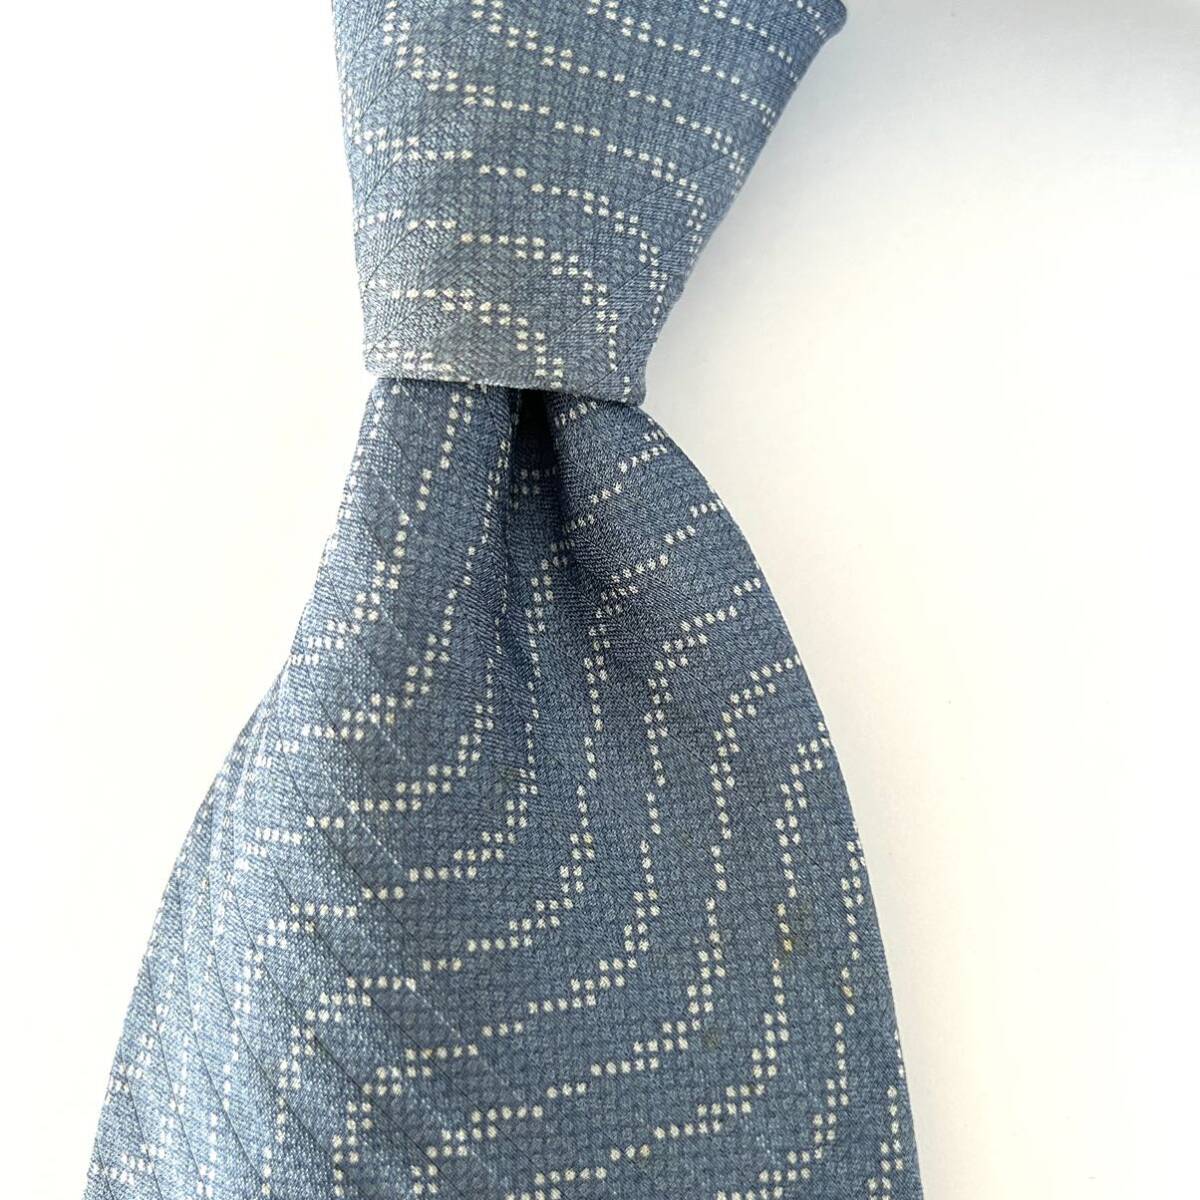  Armani koretsio-ni Италия производства шелк галстук 